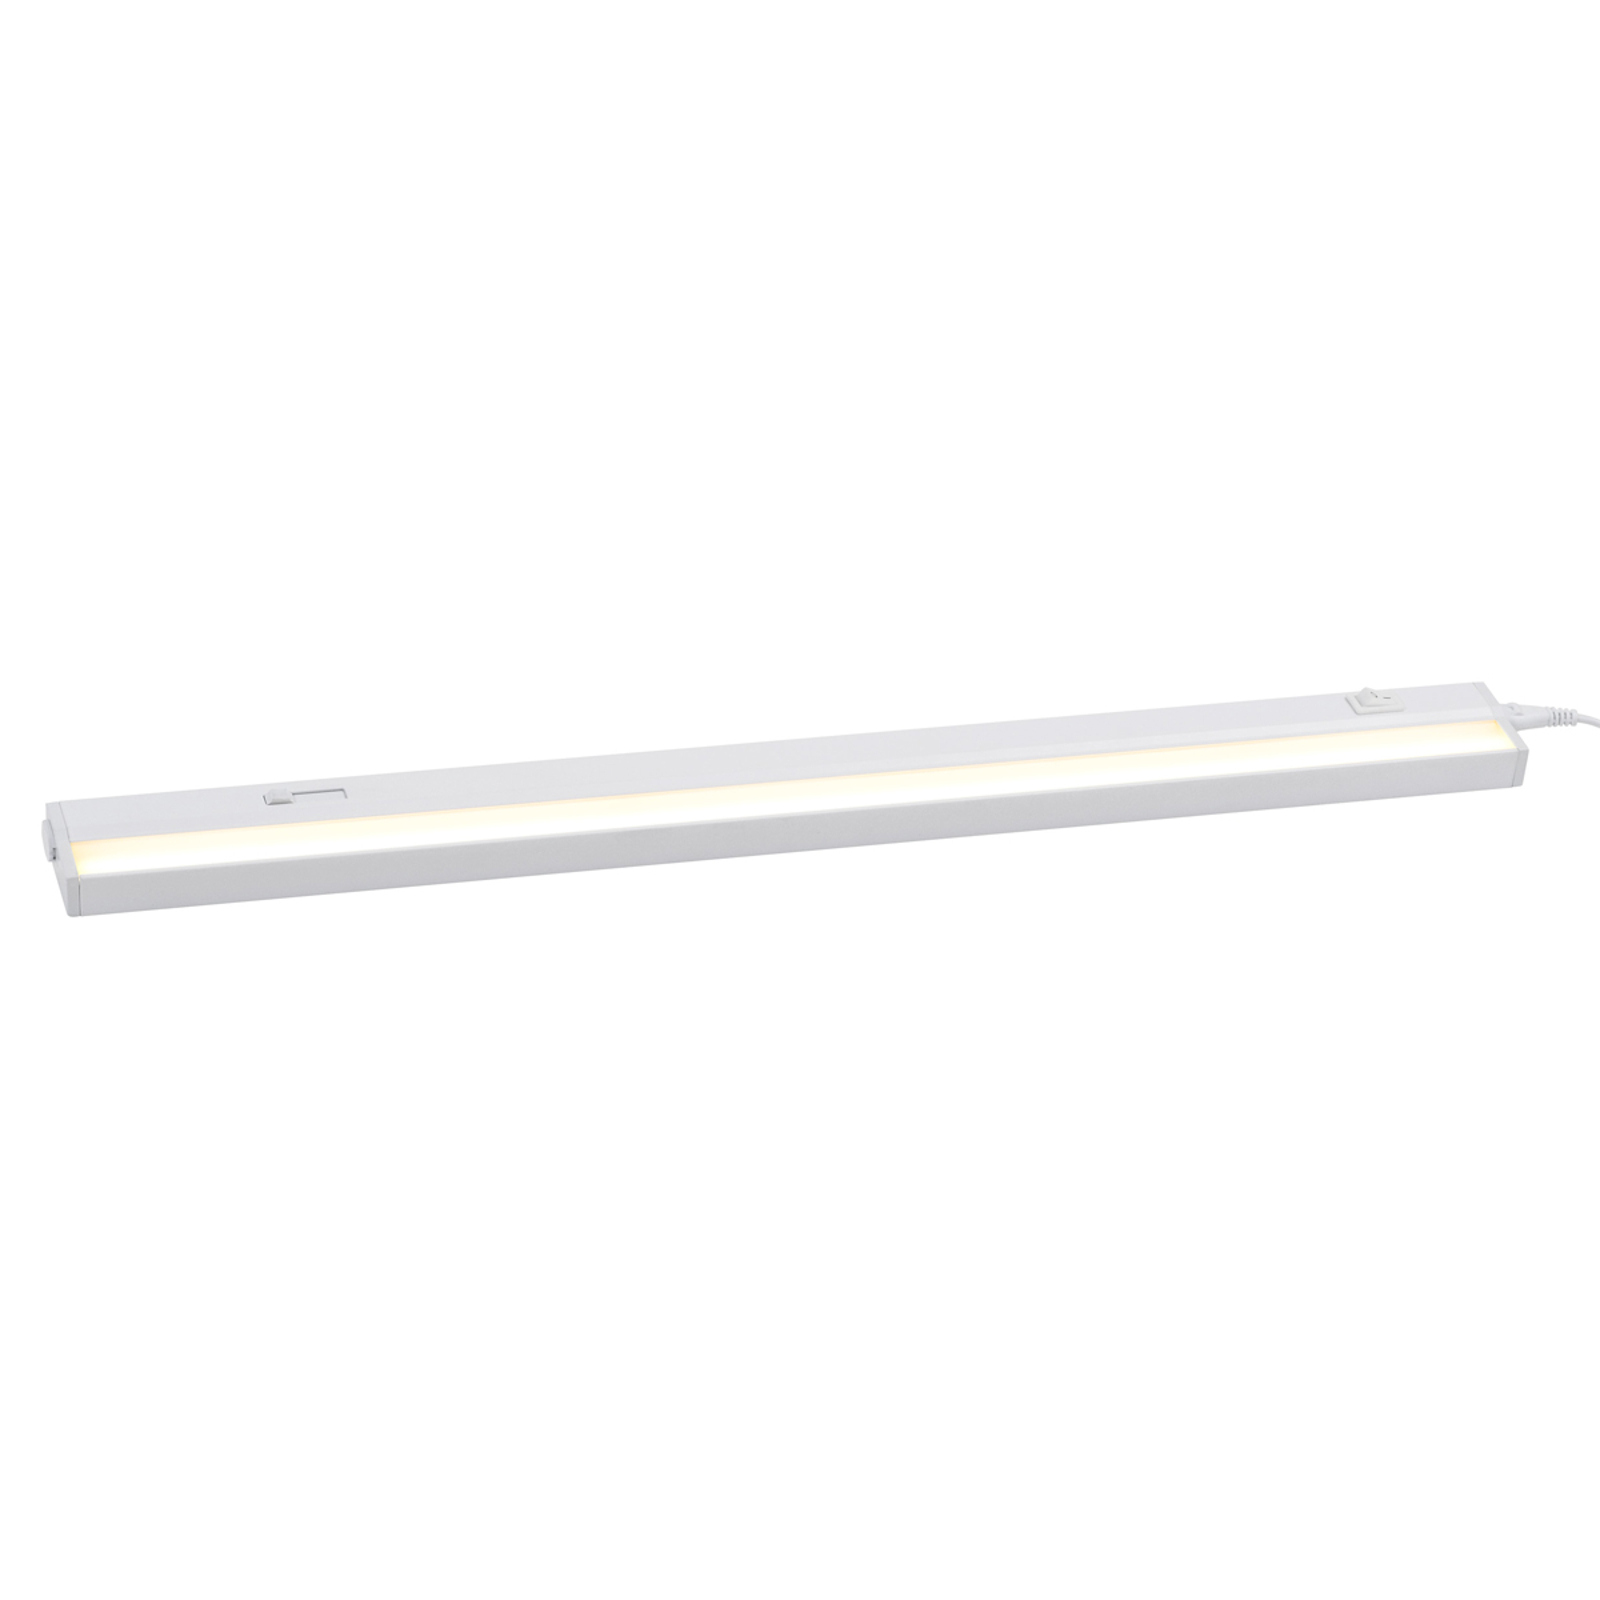 LED-kaapinalusvalaisin Cabinet Light 60,9 cm